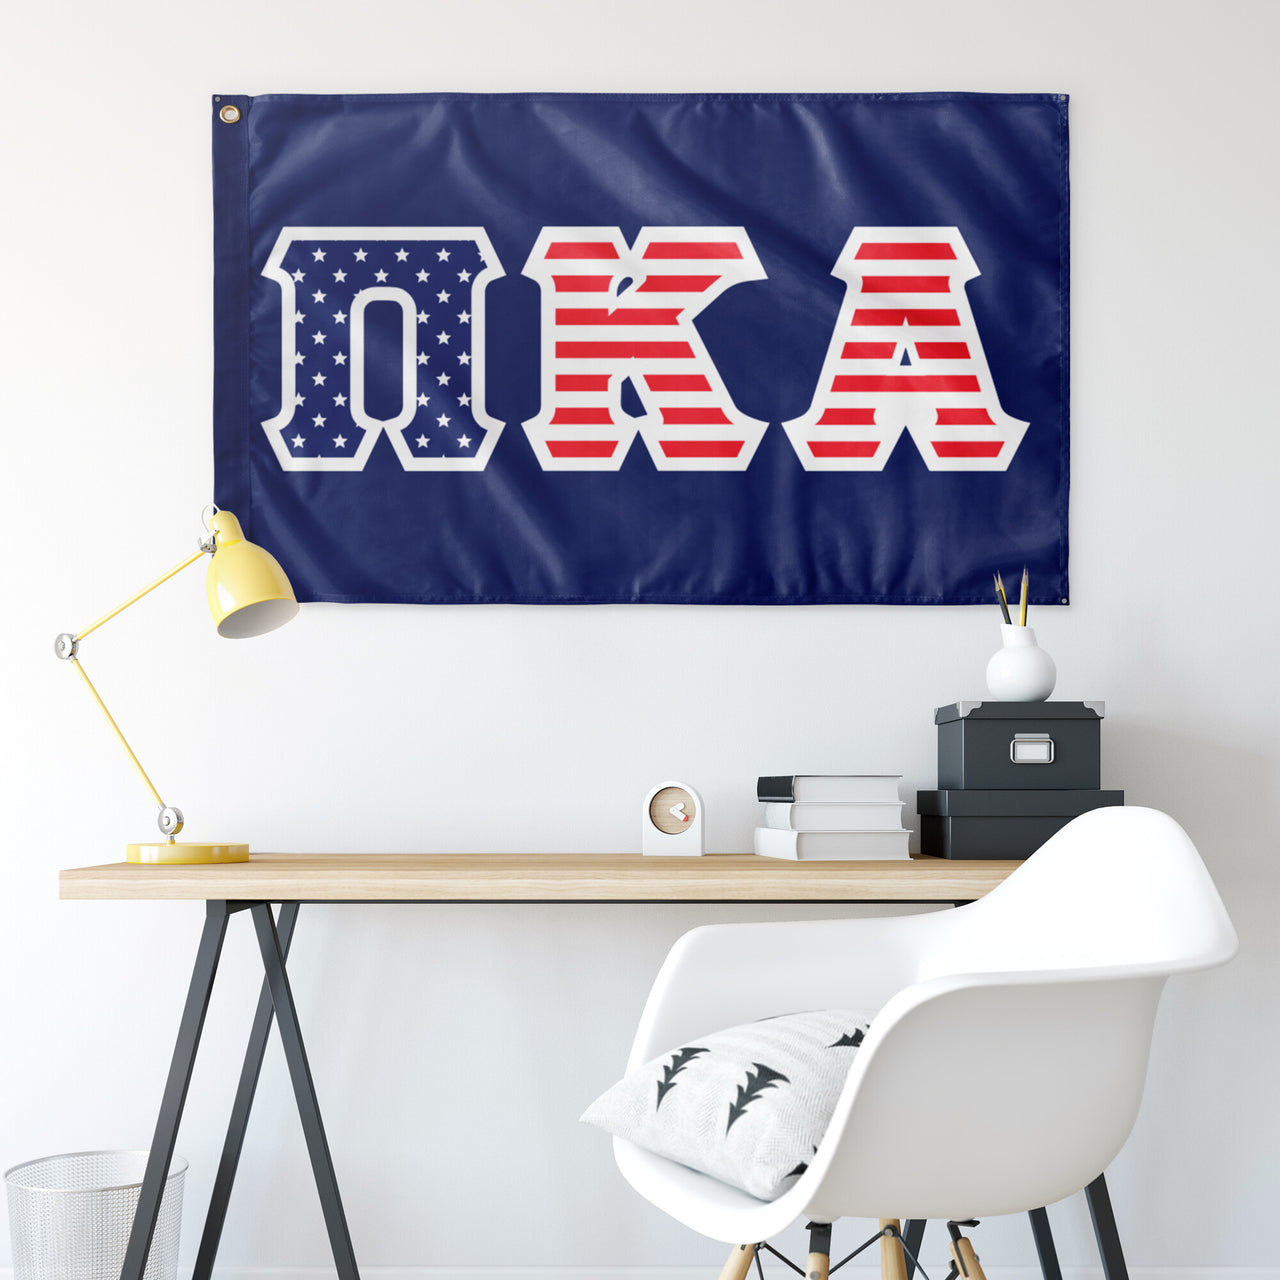 Pi Kappa Alpha American Letter Flag